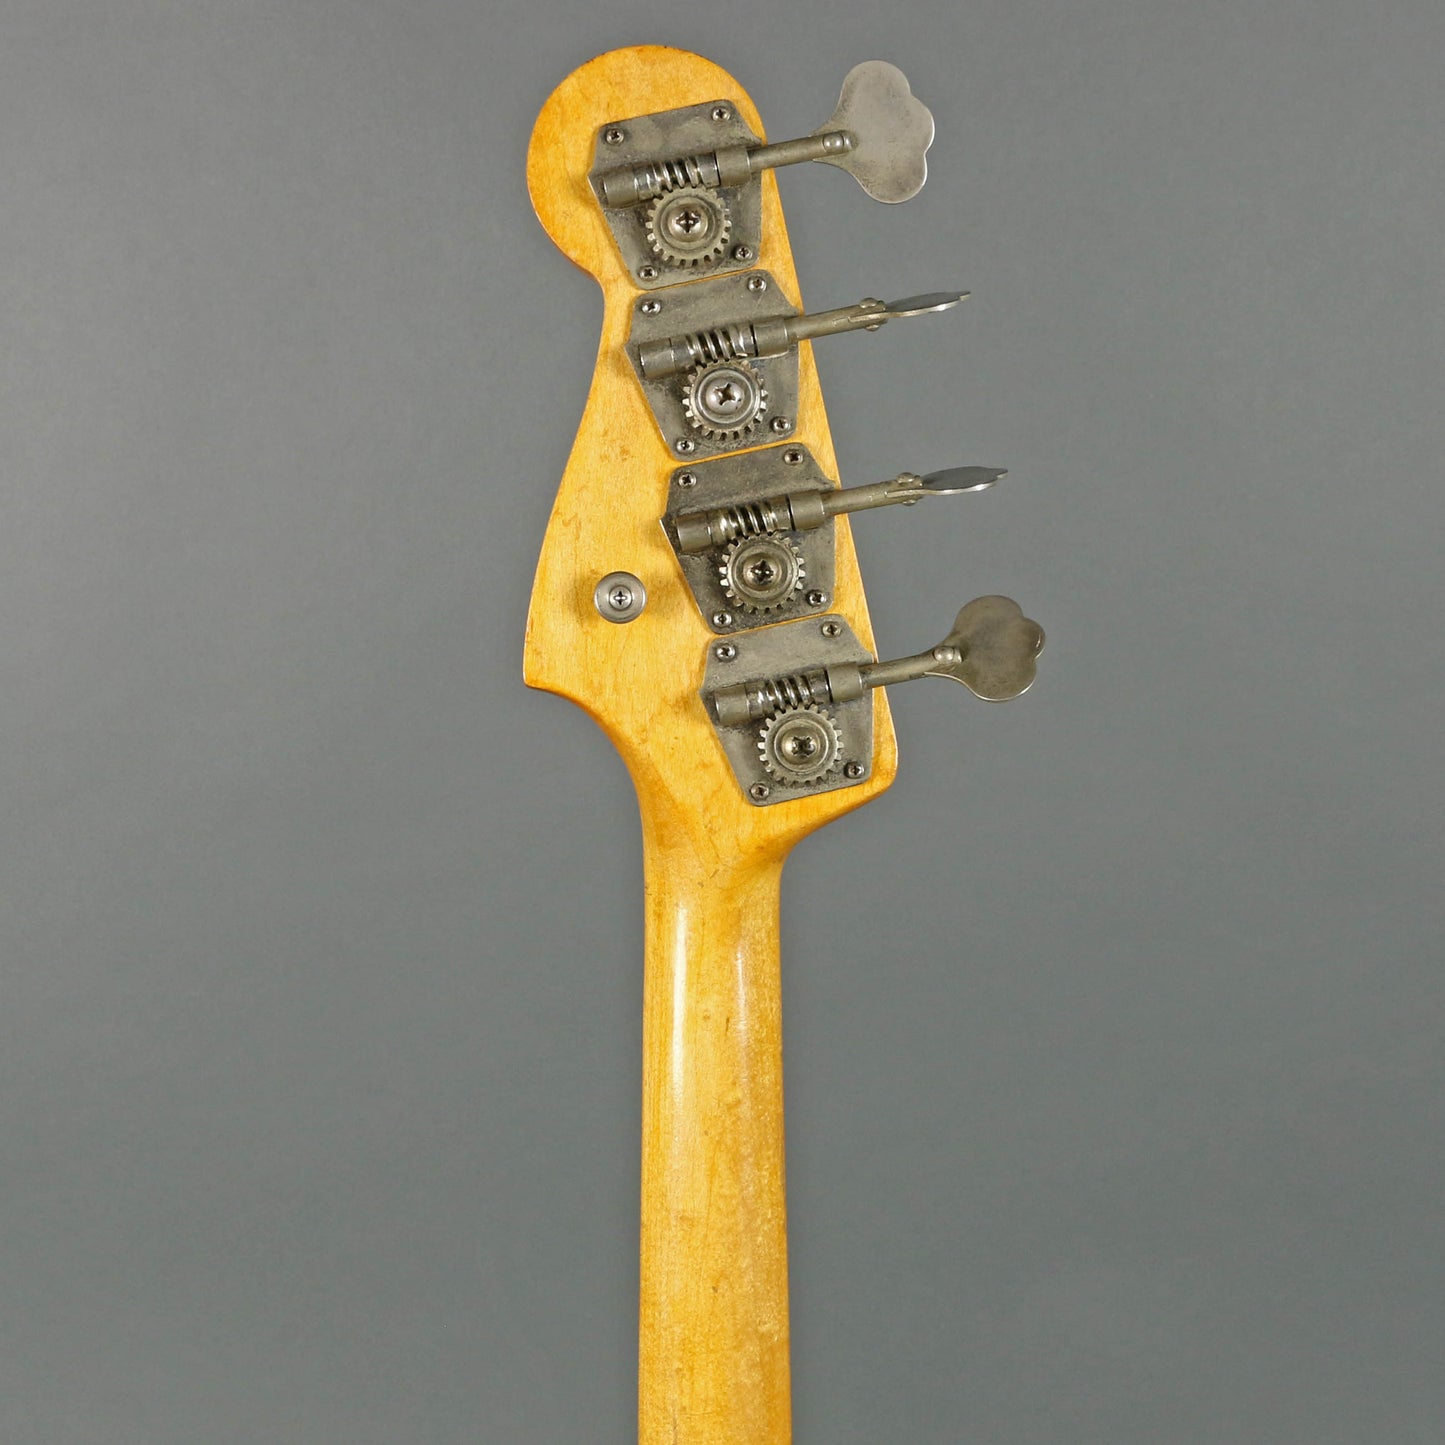 1965 Fender Jazz Bass